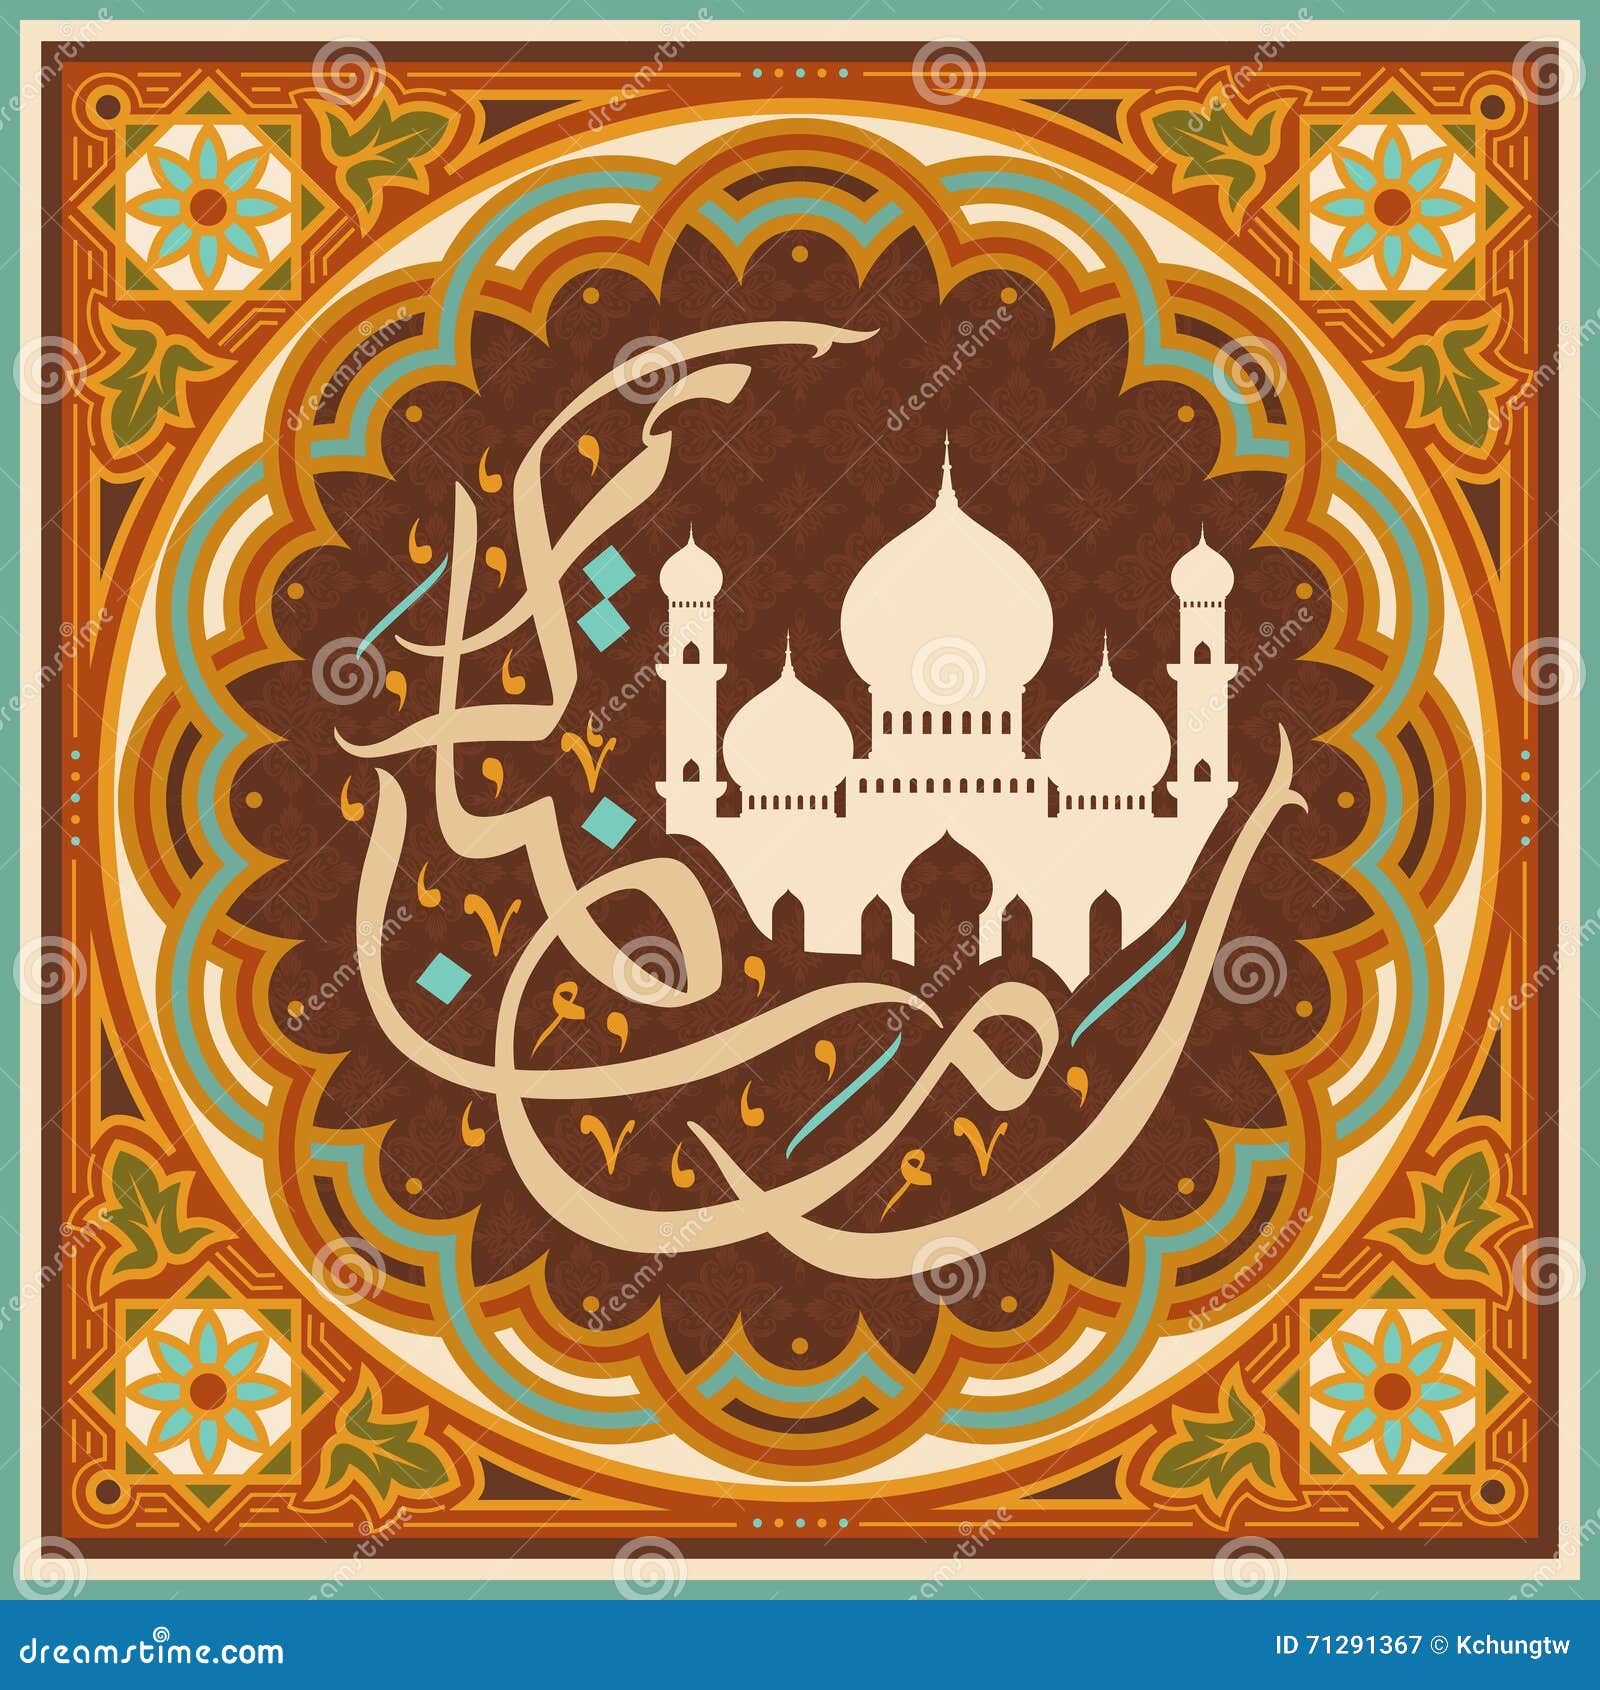 Ramadan Kareem Calligraphy Design Stock Vector ...